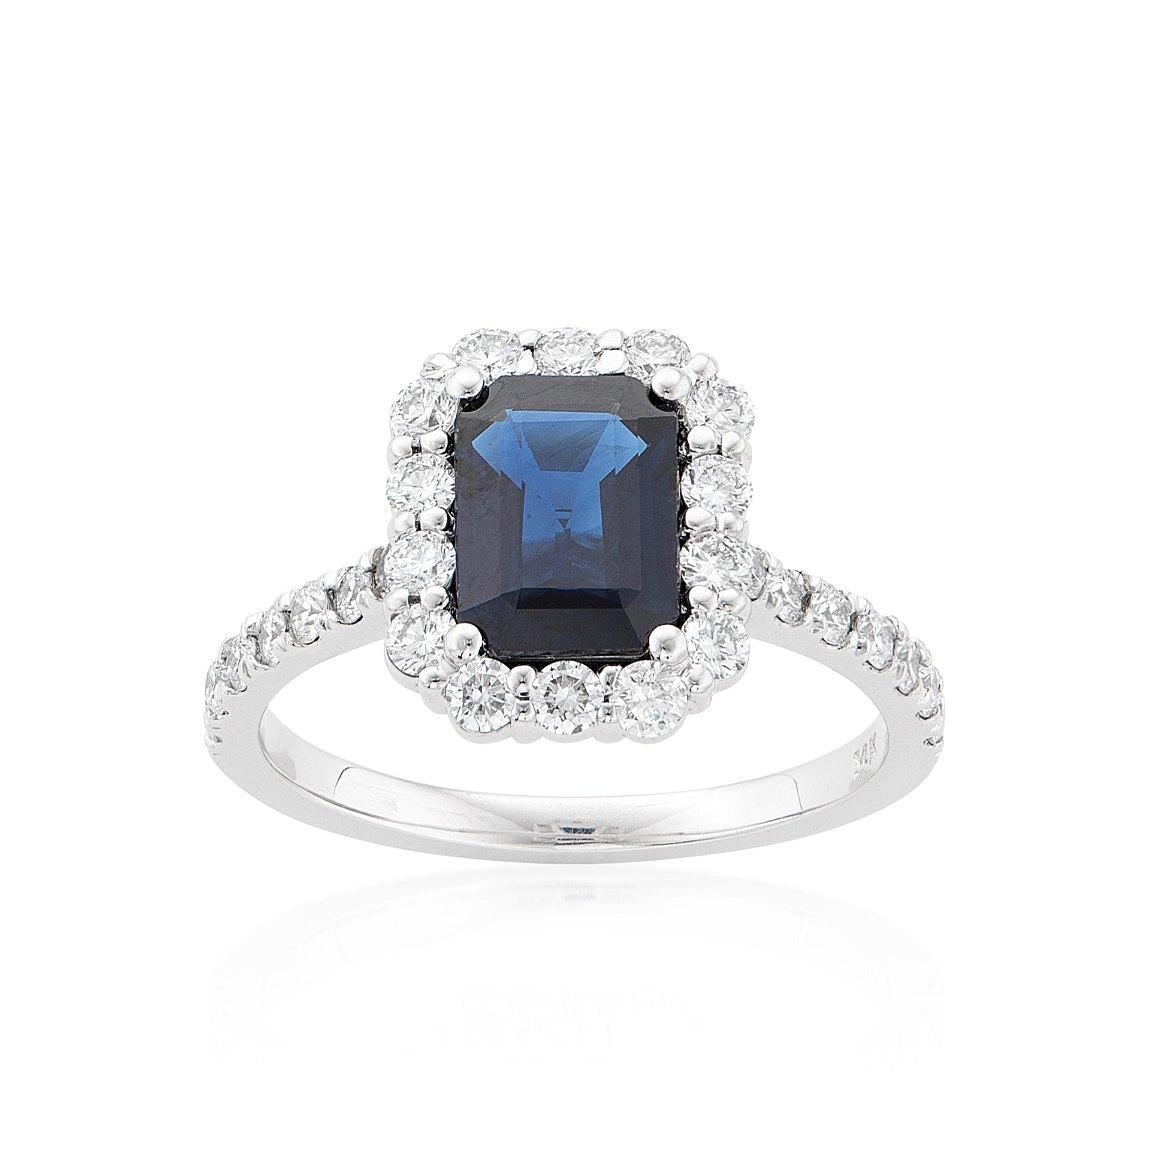 White Gold 1.70 CT Emerald Cut Sapphire & Diamond Ring 0